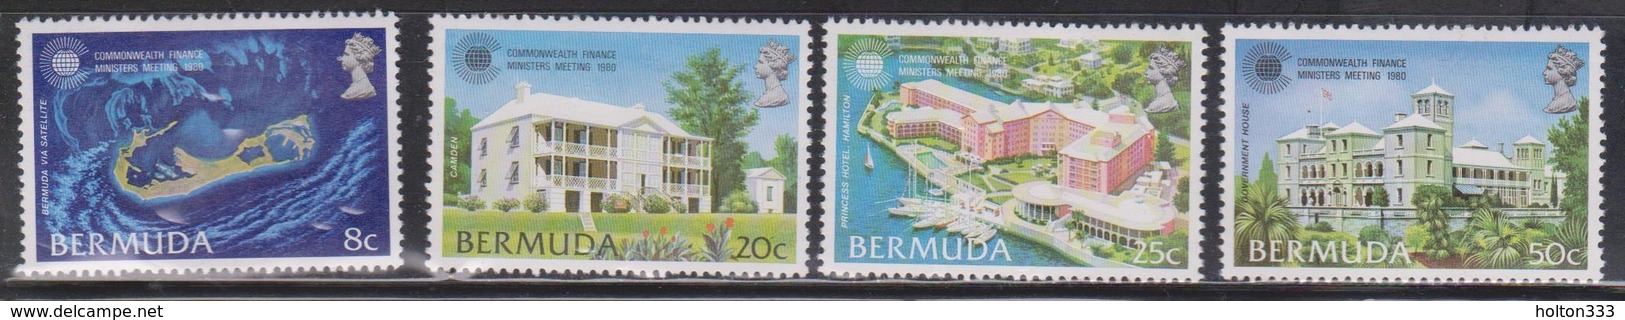 BERMUDA Scott # 402-5 MNH - Commonwealth Finance Ministers Meeting - Bermuda